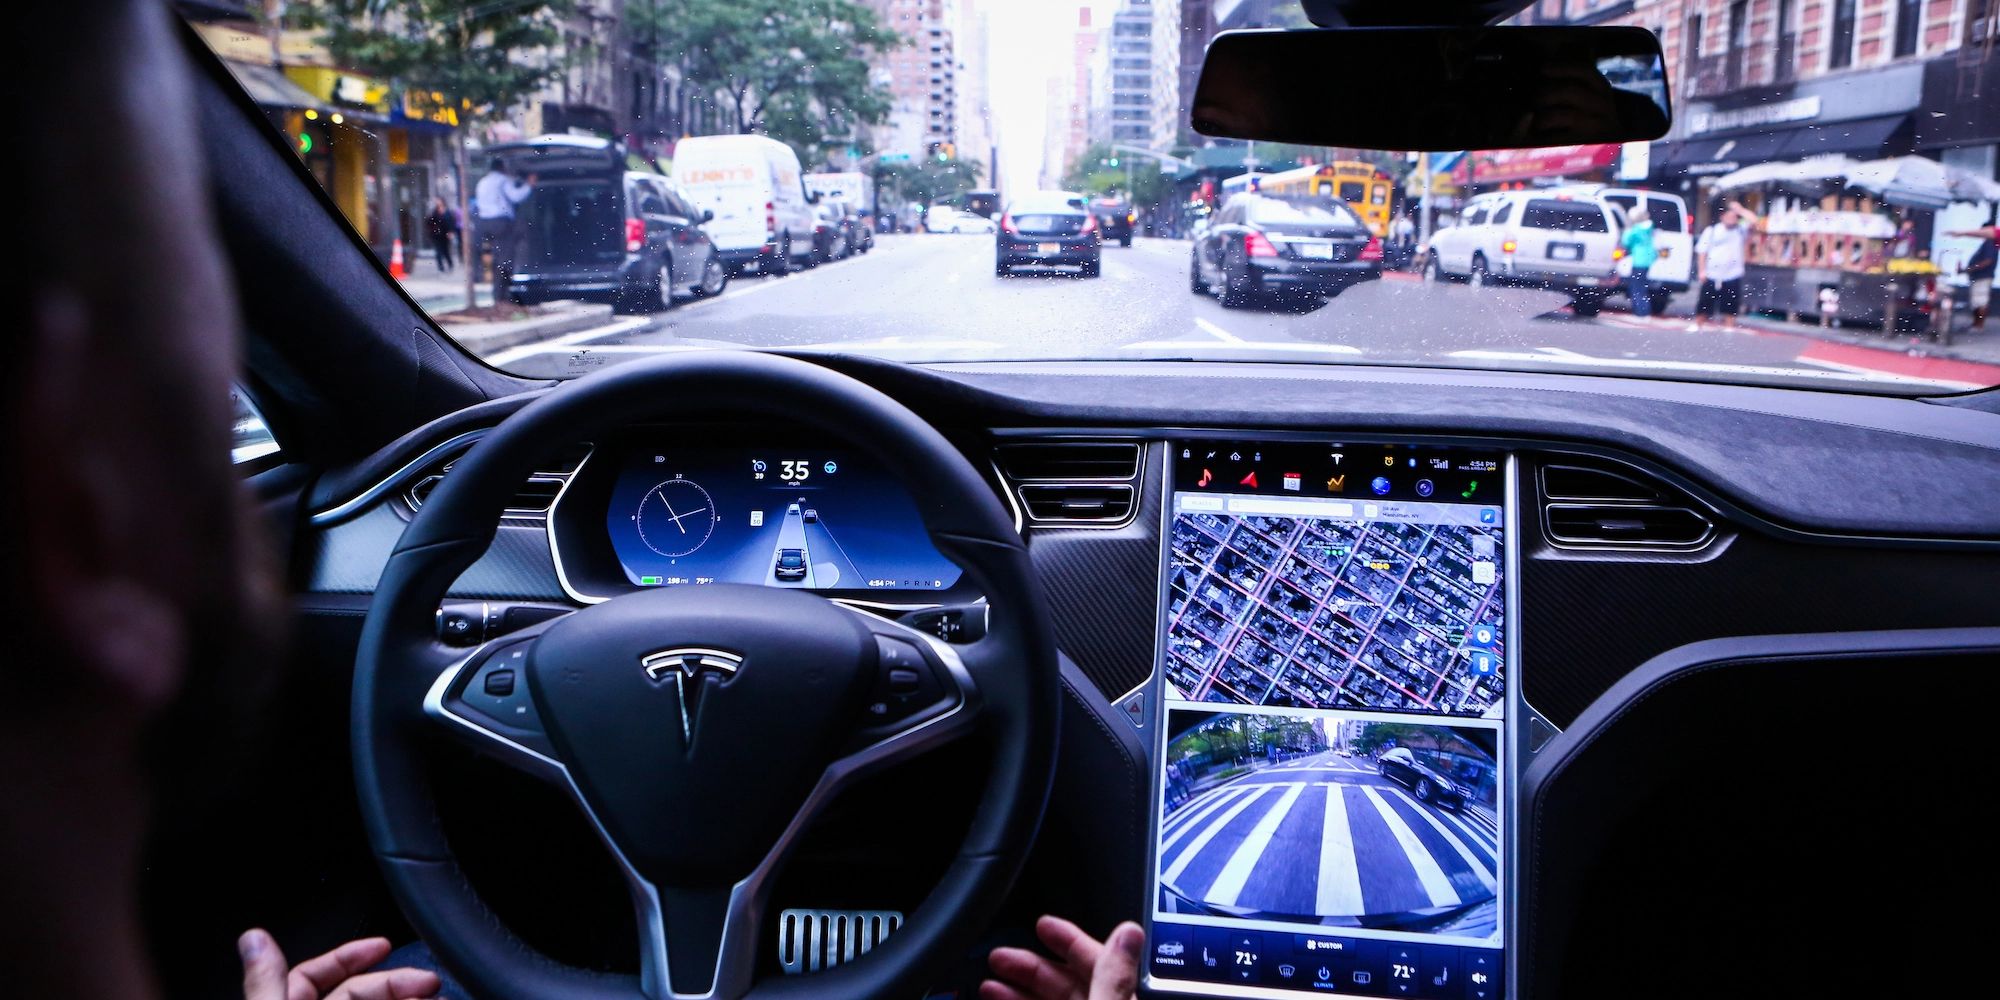 A picture of the Tesla Autopilot mode